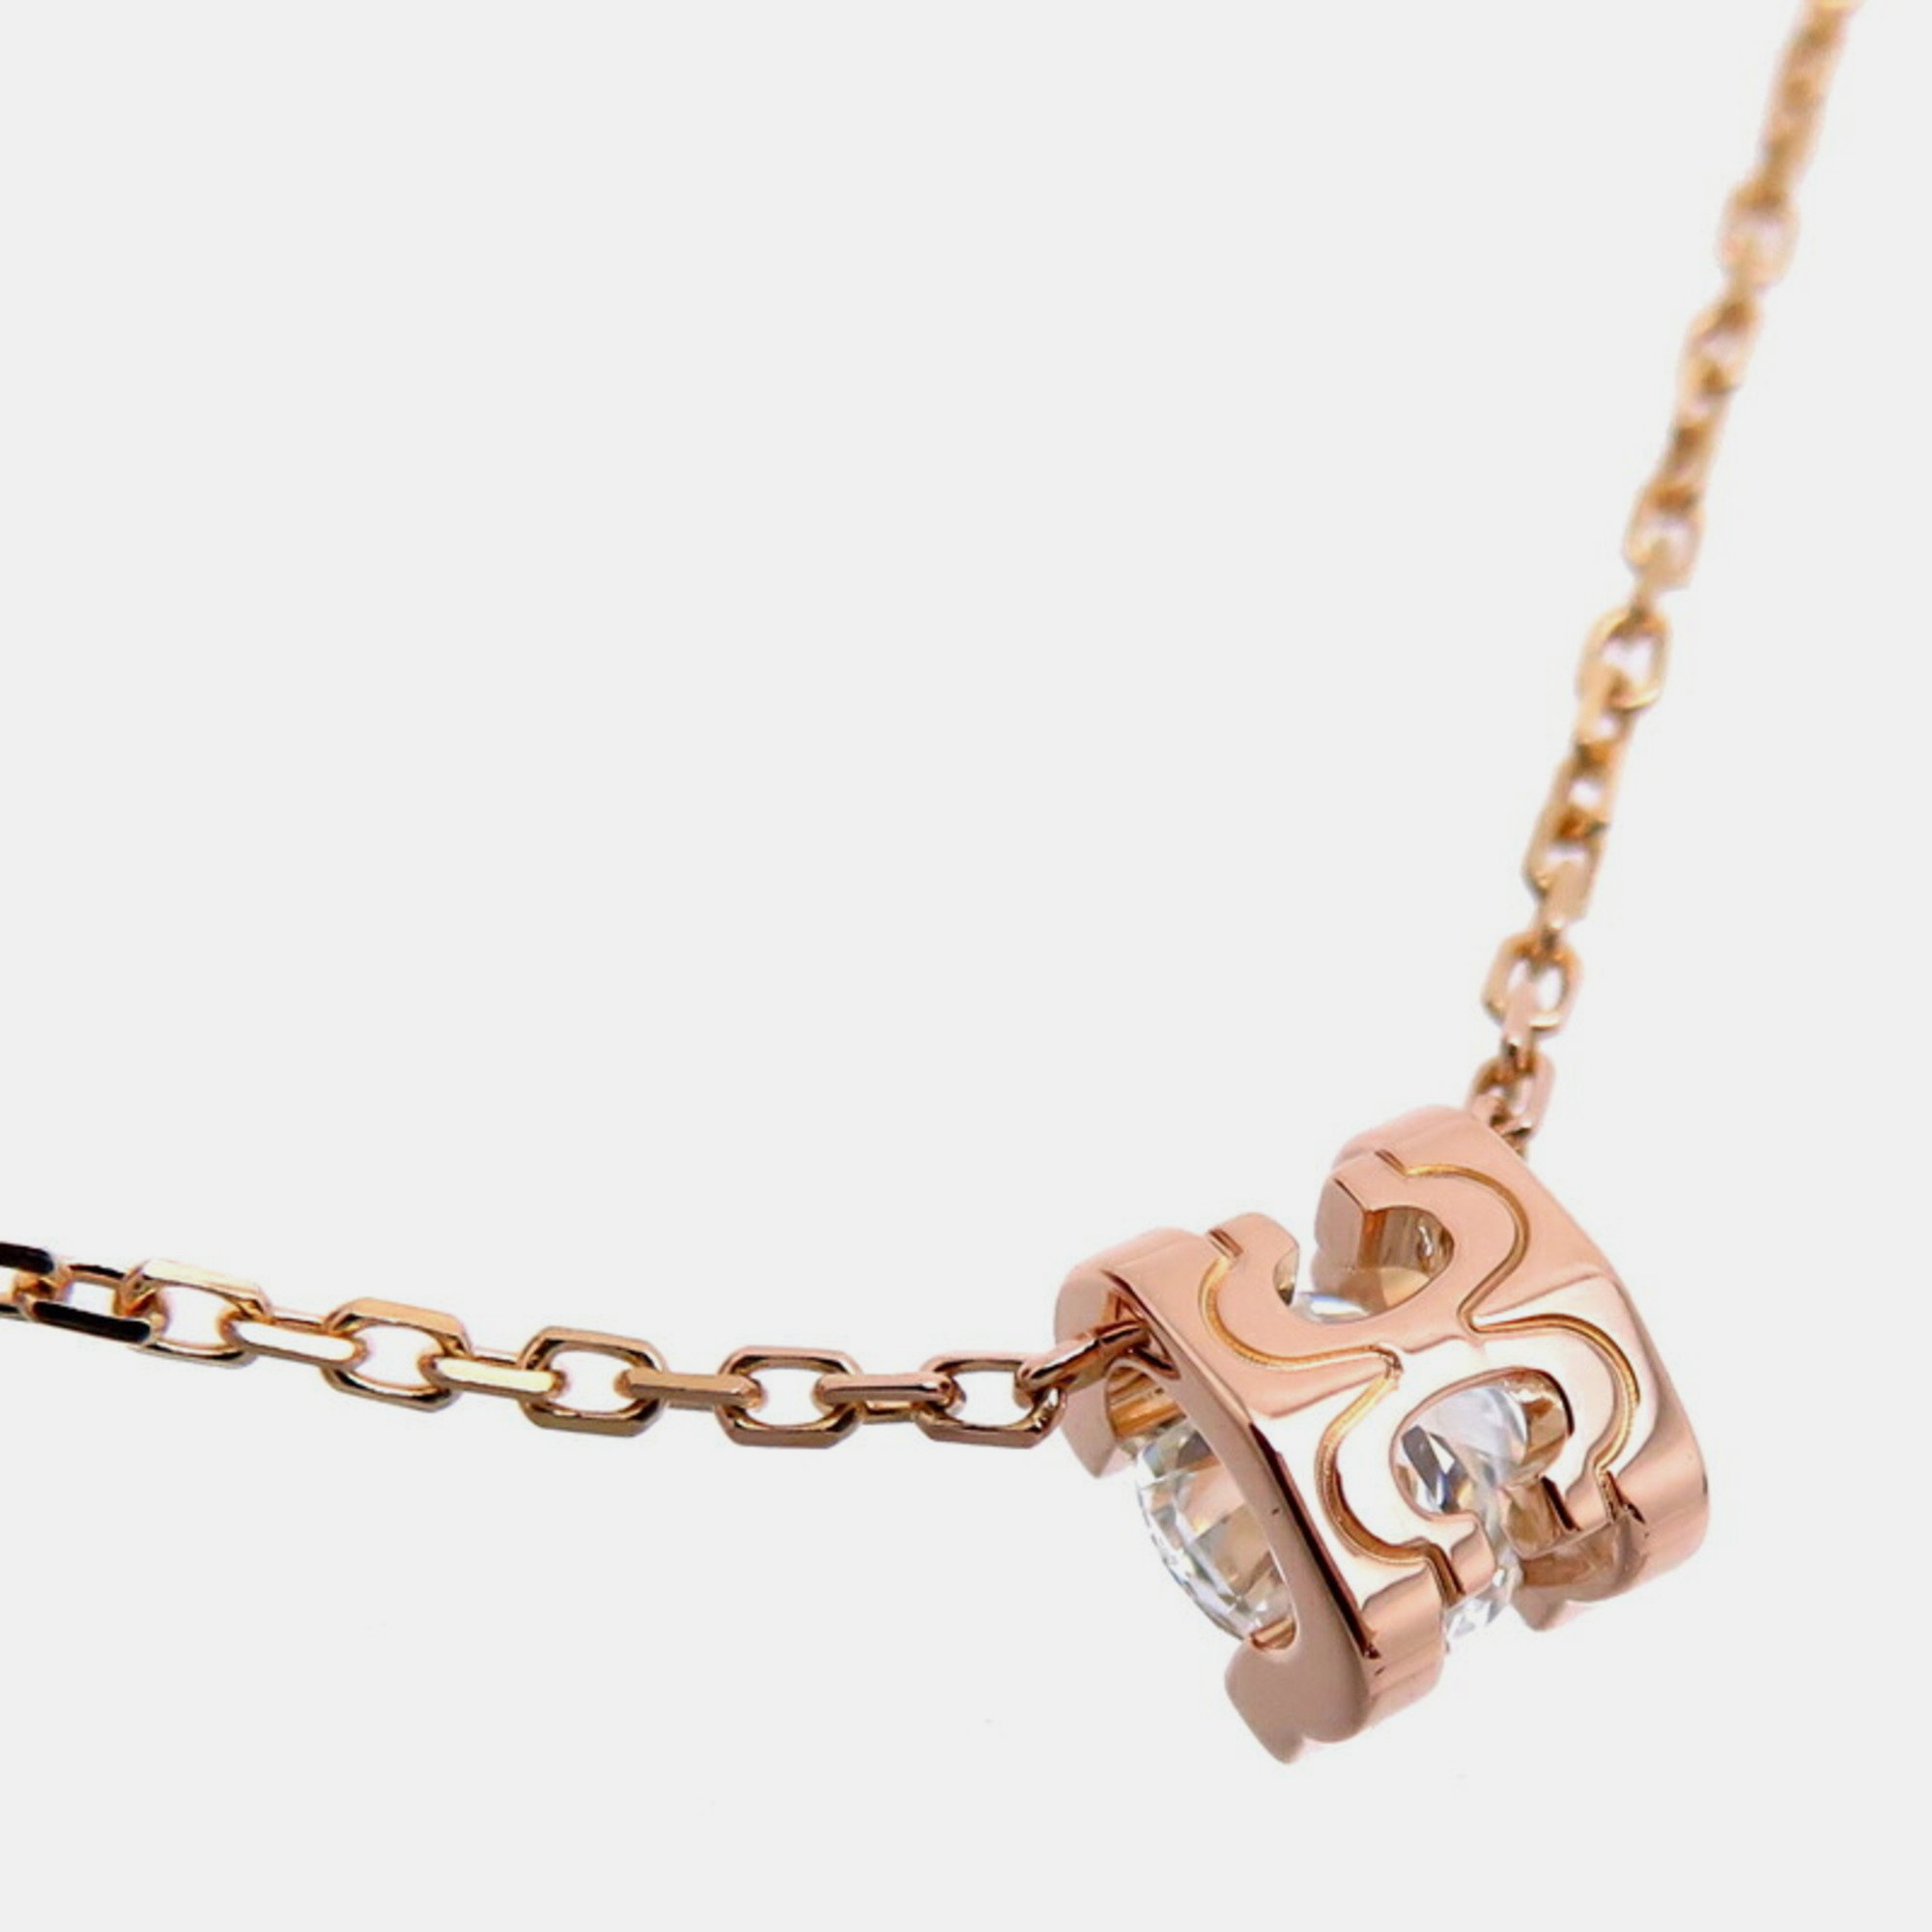 Cartier C De Cartier 18K Rose Gold Diamond Necklace